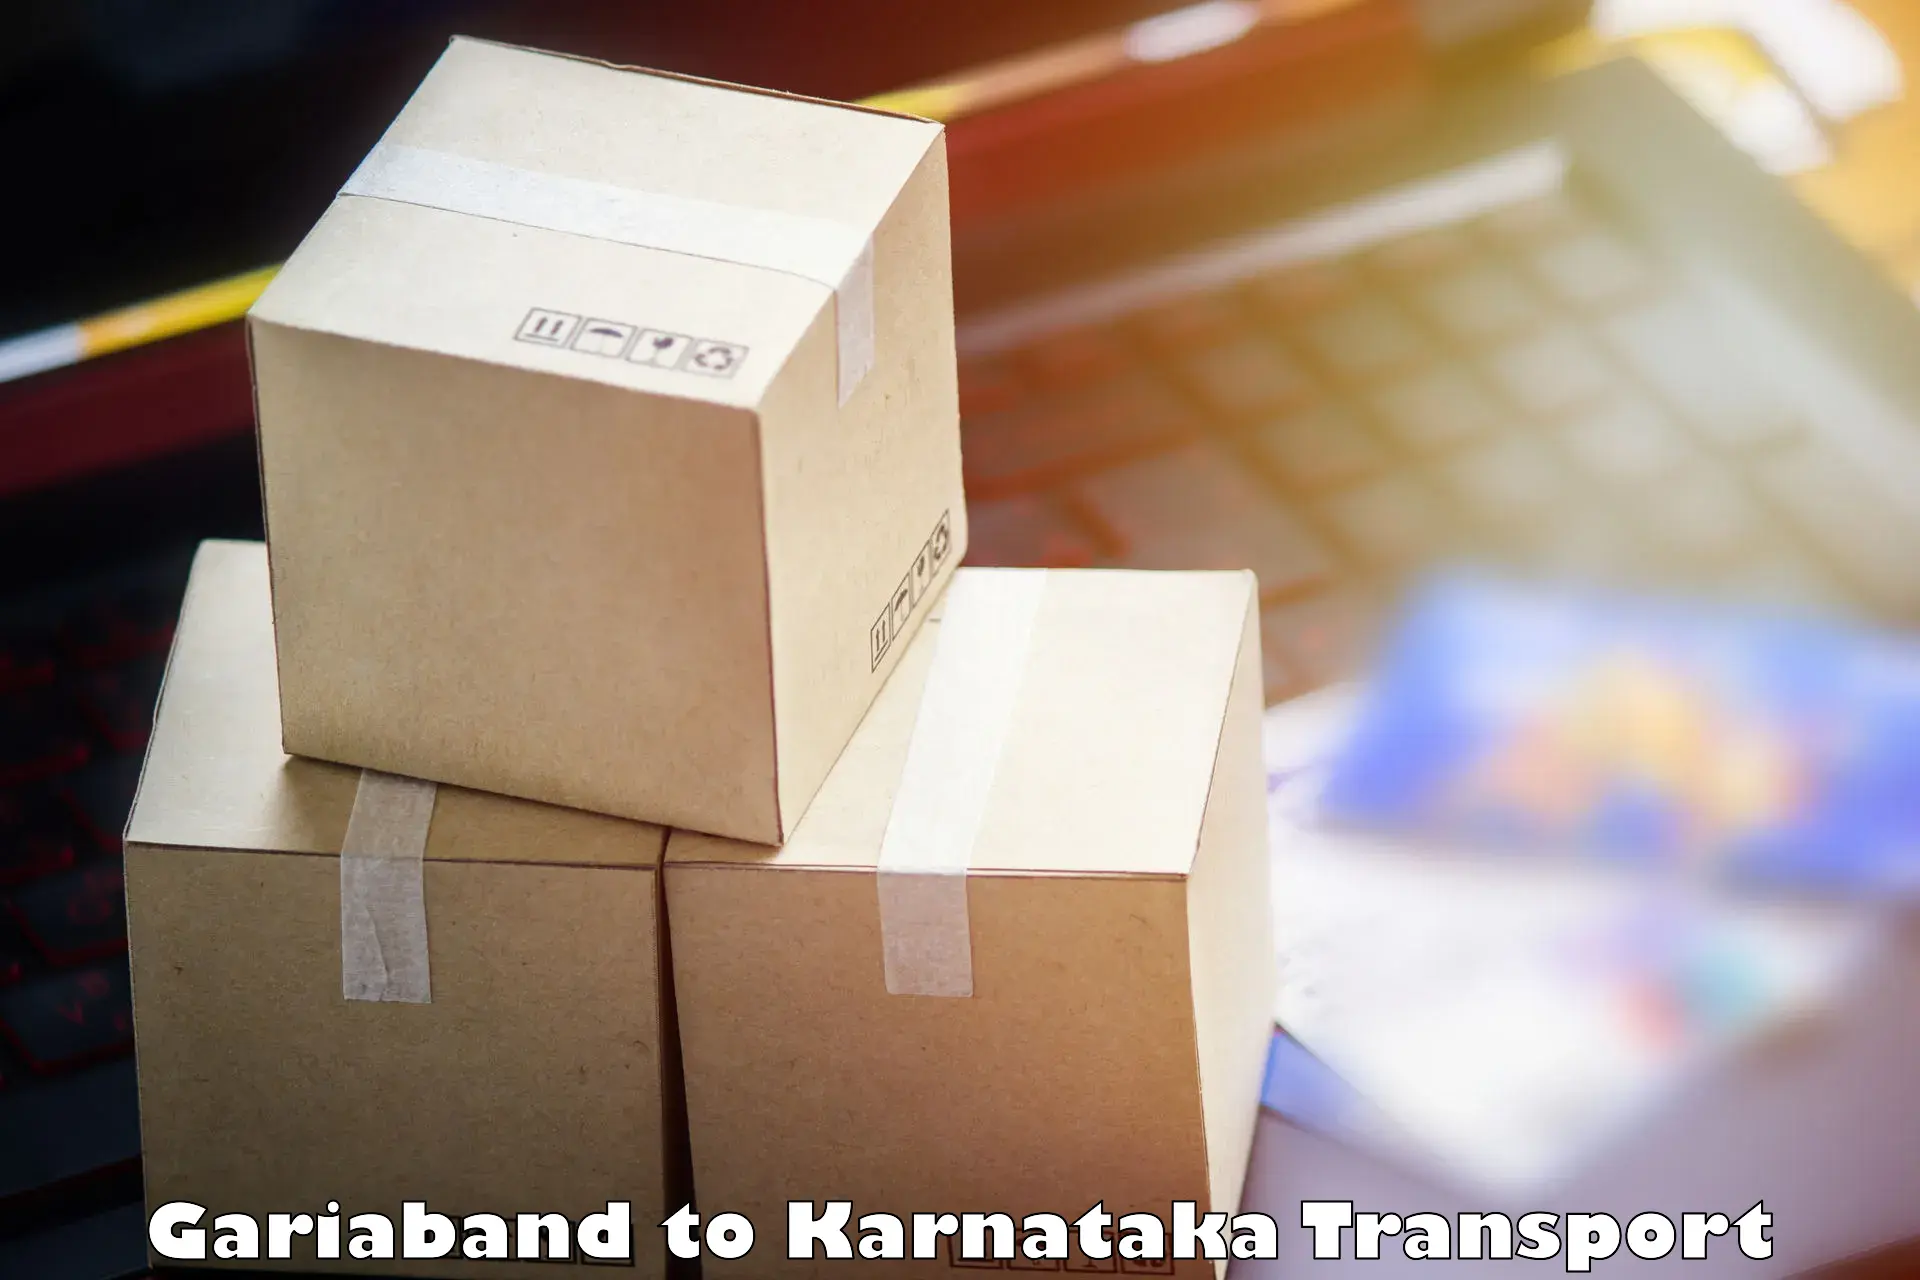 Nearby transport service Gariaband to Karnataka